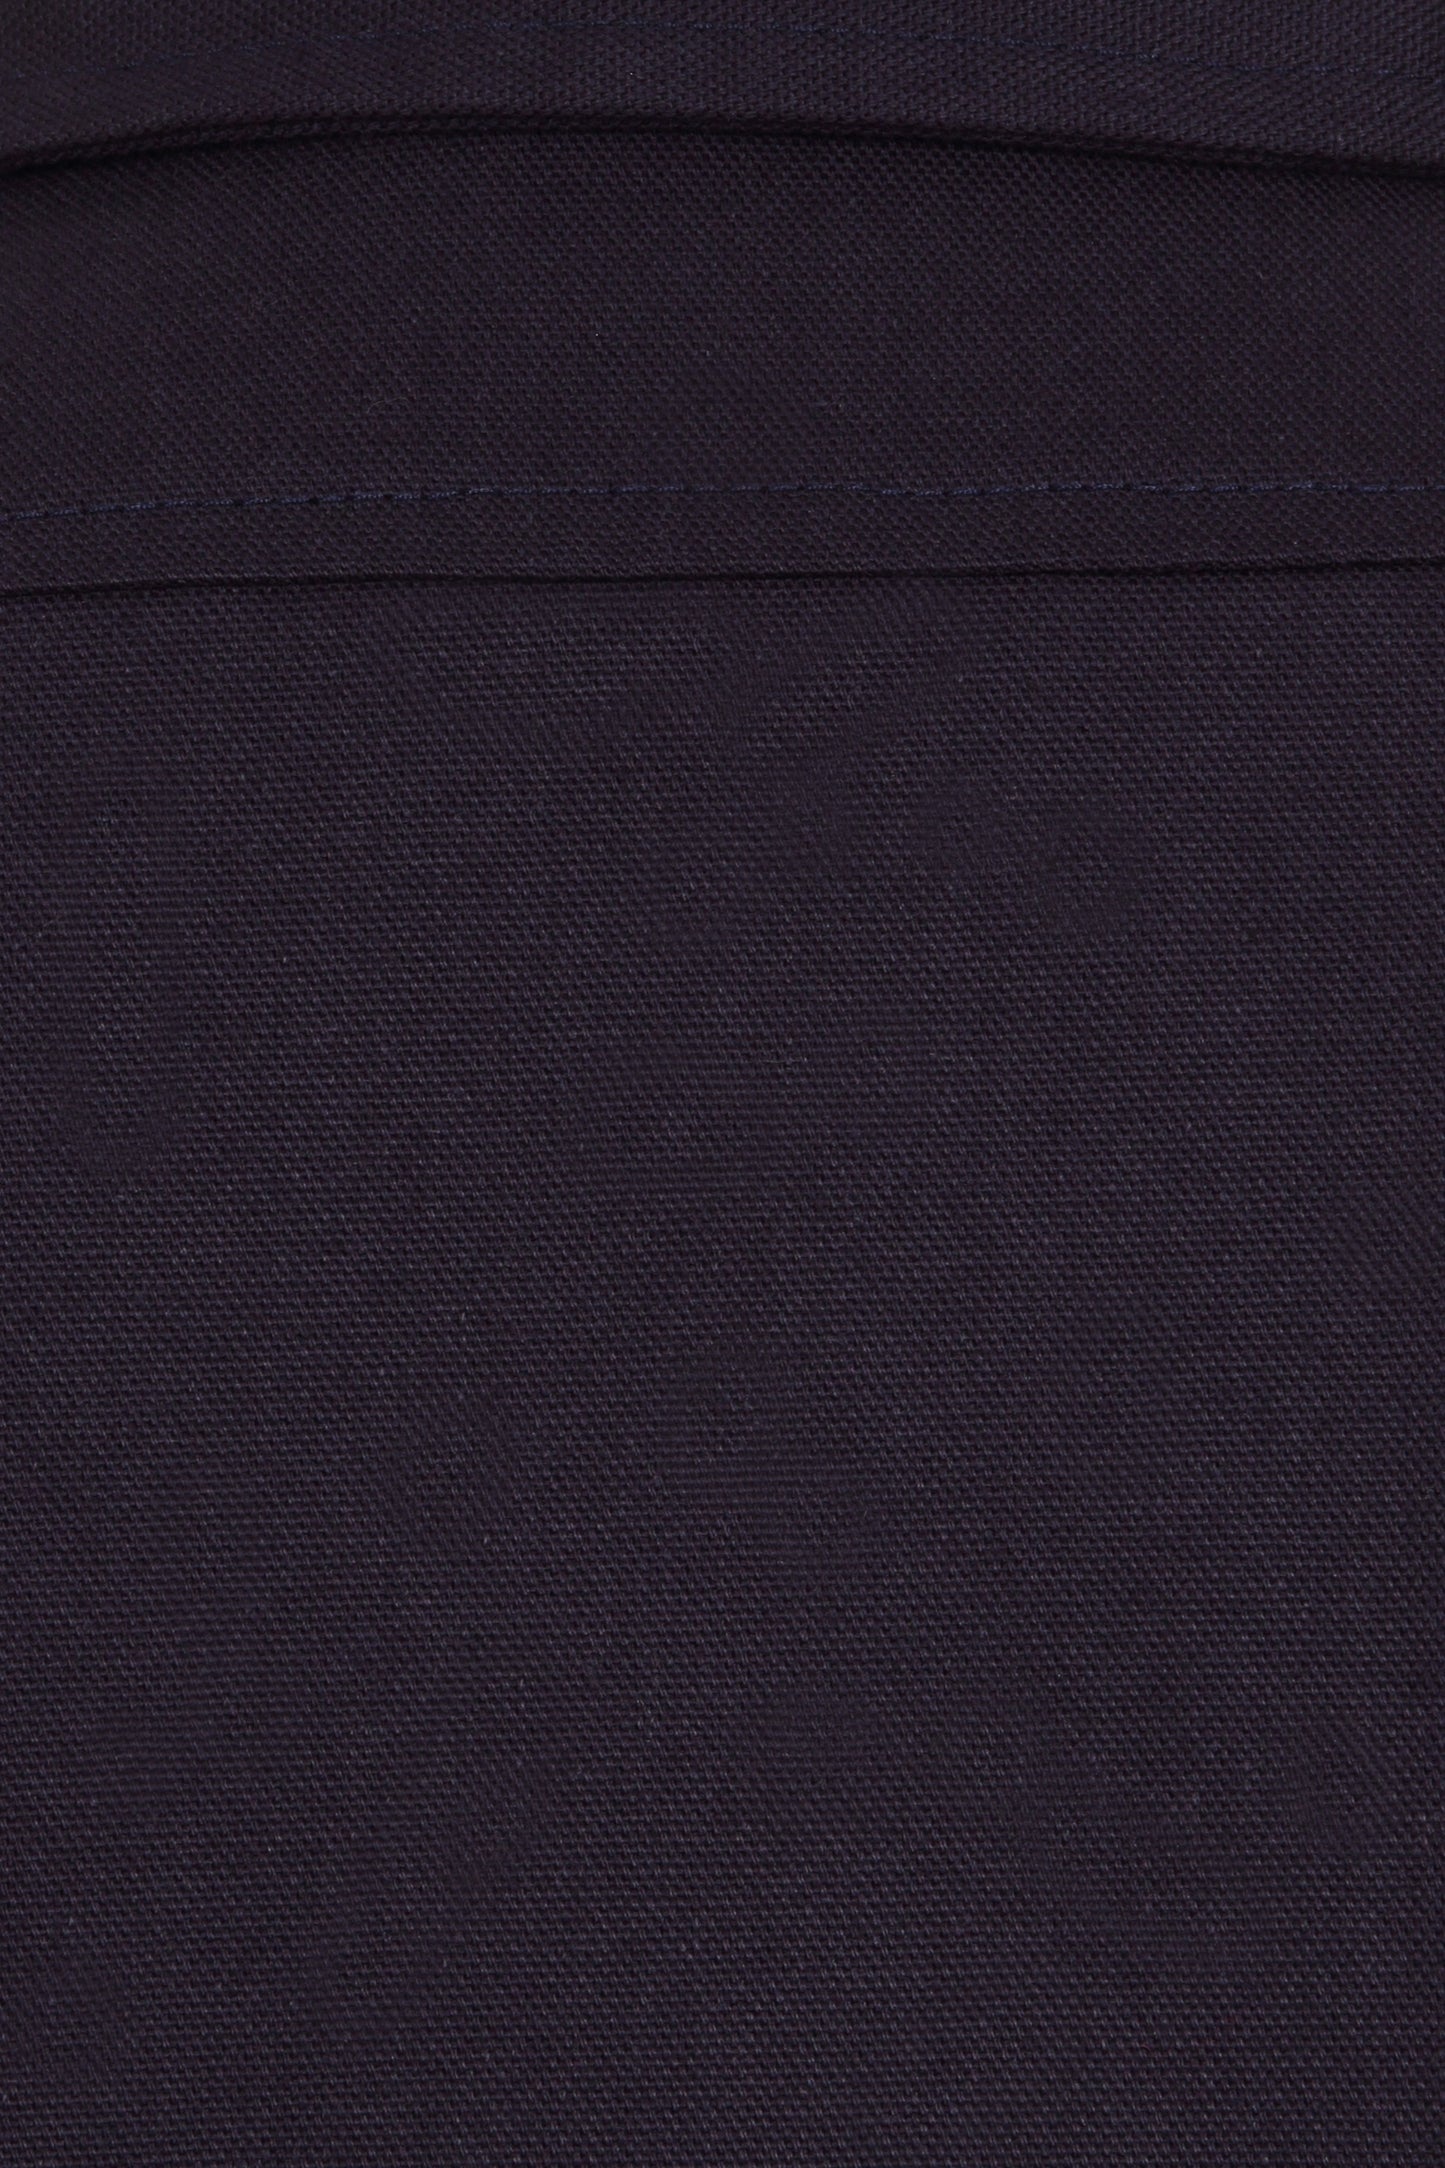 Yarmo Shirt, Men's Long Sleeve Sailcloth Cotton Work Shirt , Navy - SH011